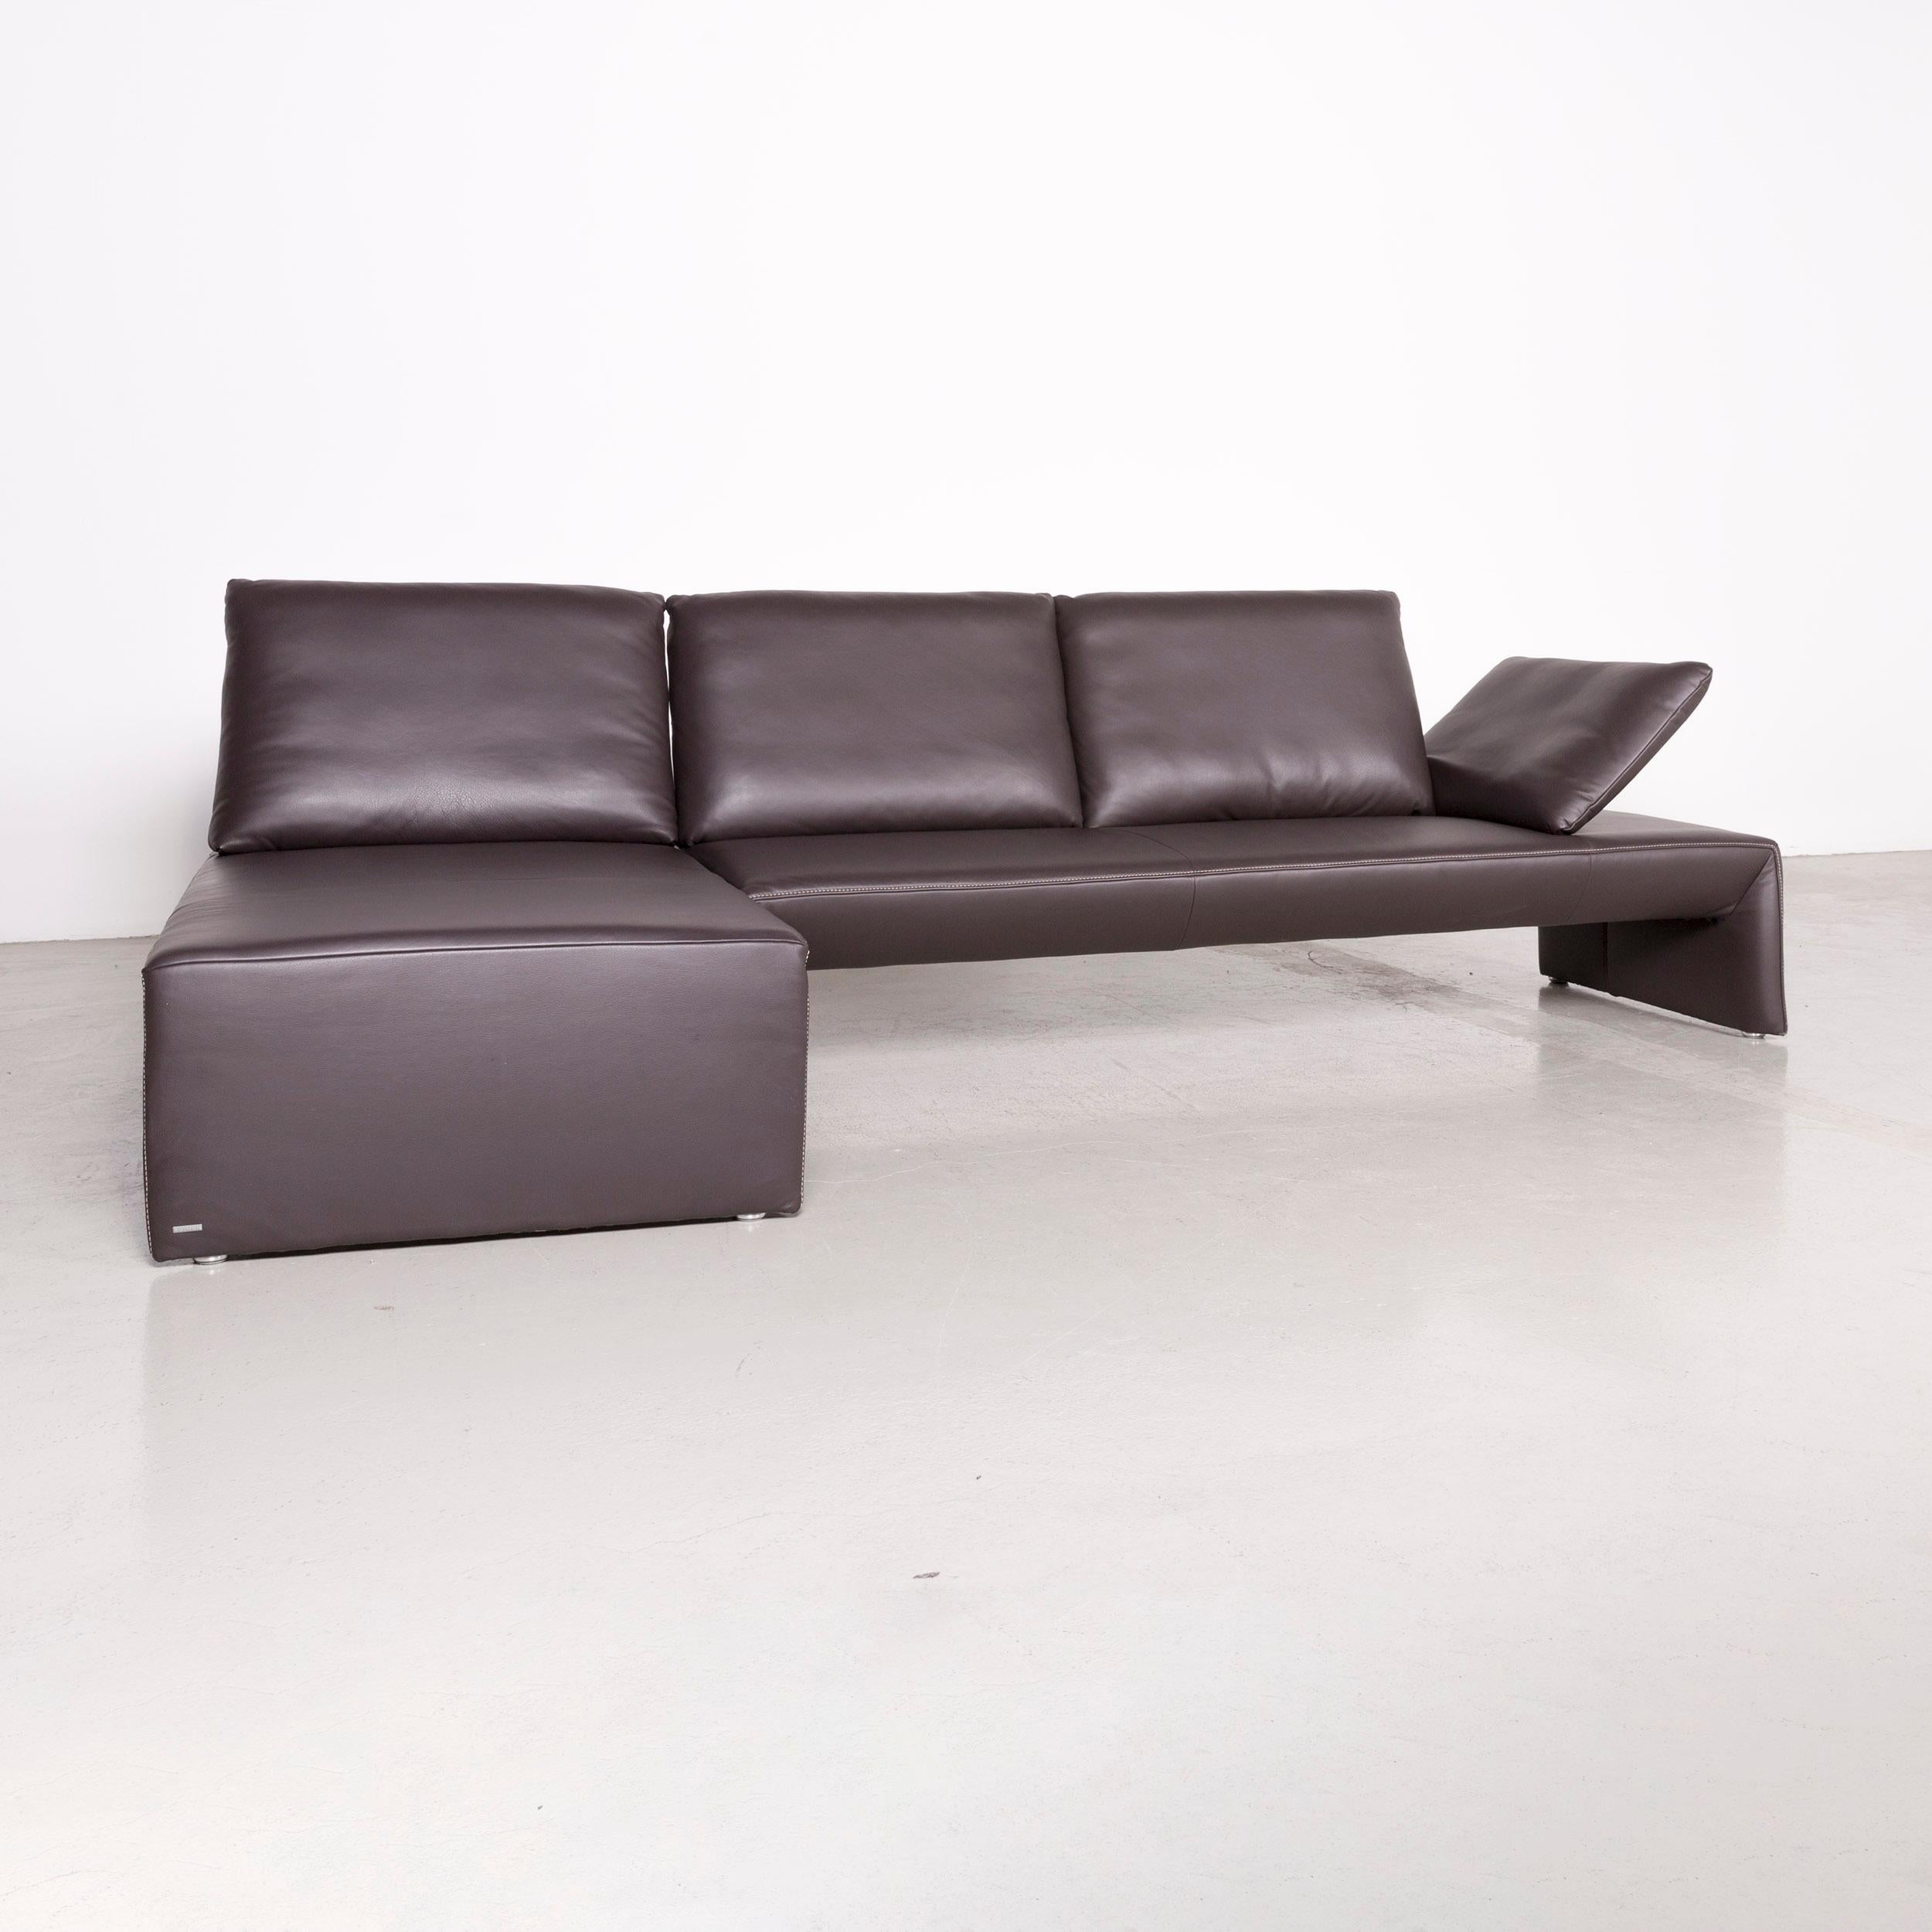 German Koinor Rivo Designer Leather Corner Sofa Brown Couch For Sale